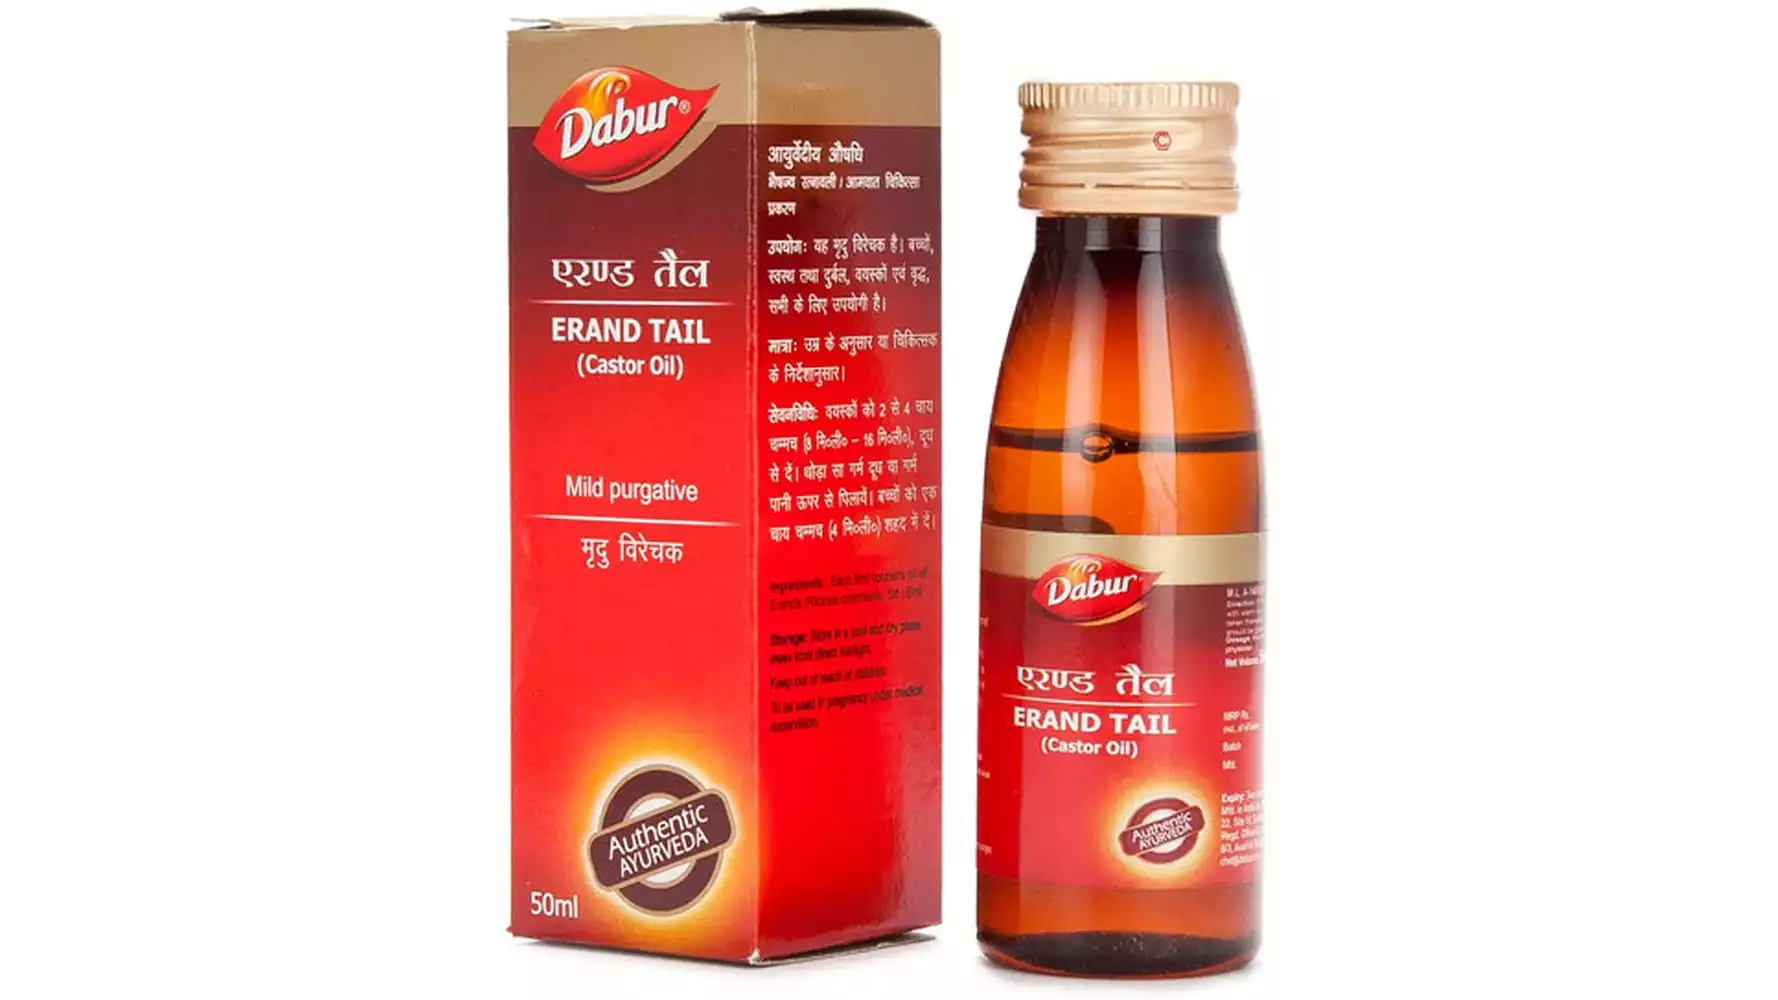 Dabur Erand Tail (Castor Oil) (50ml)